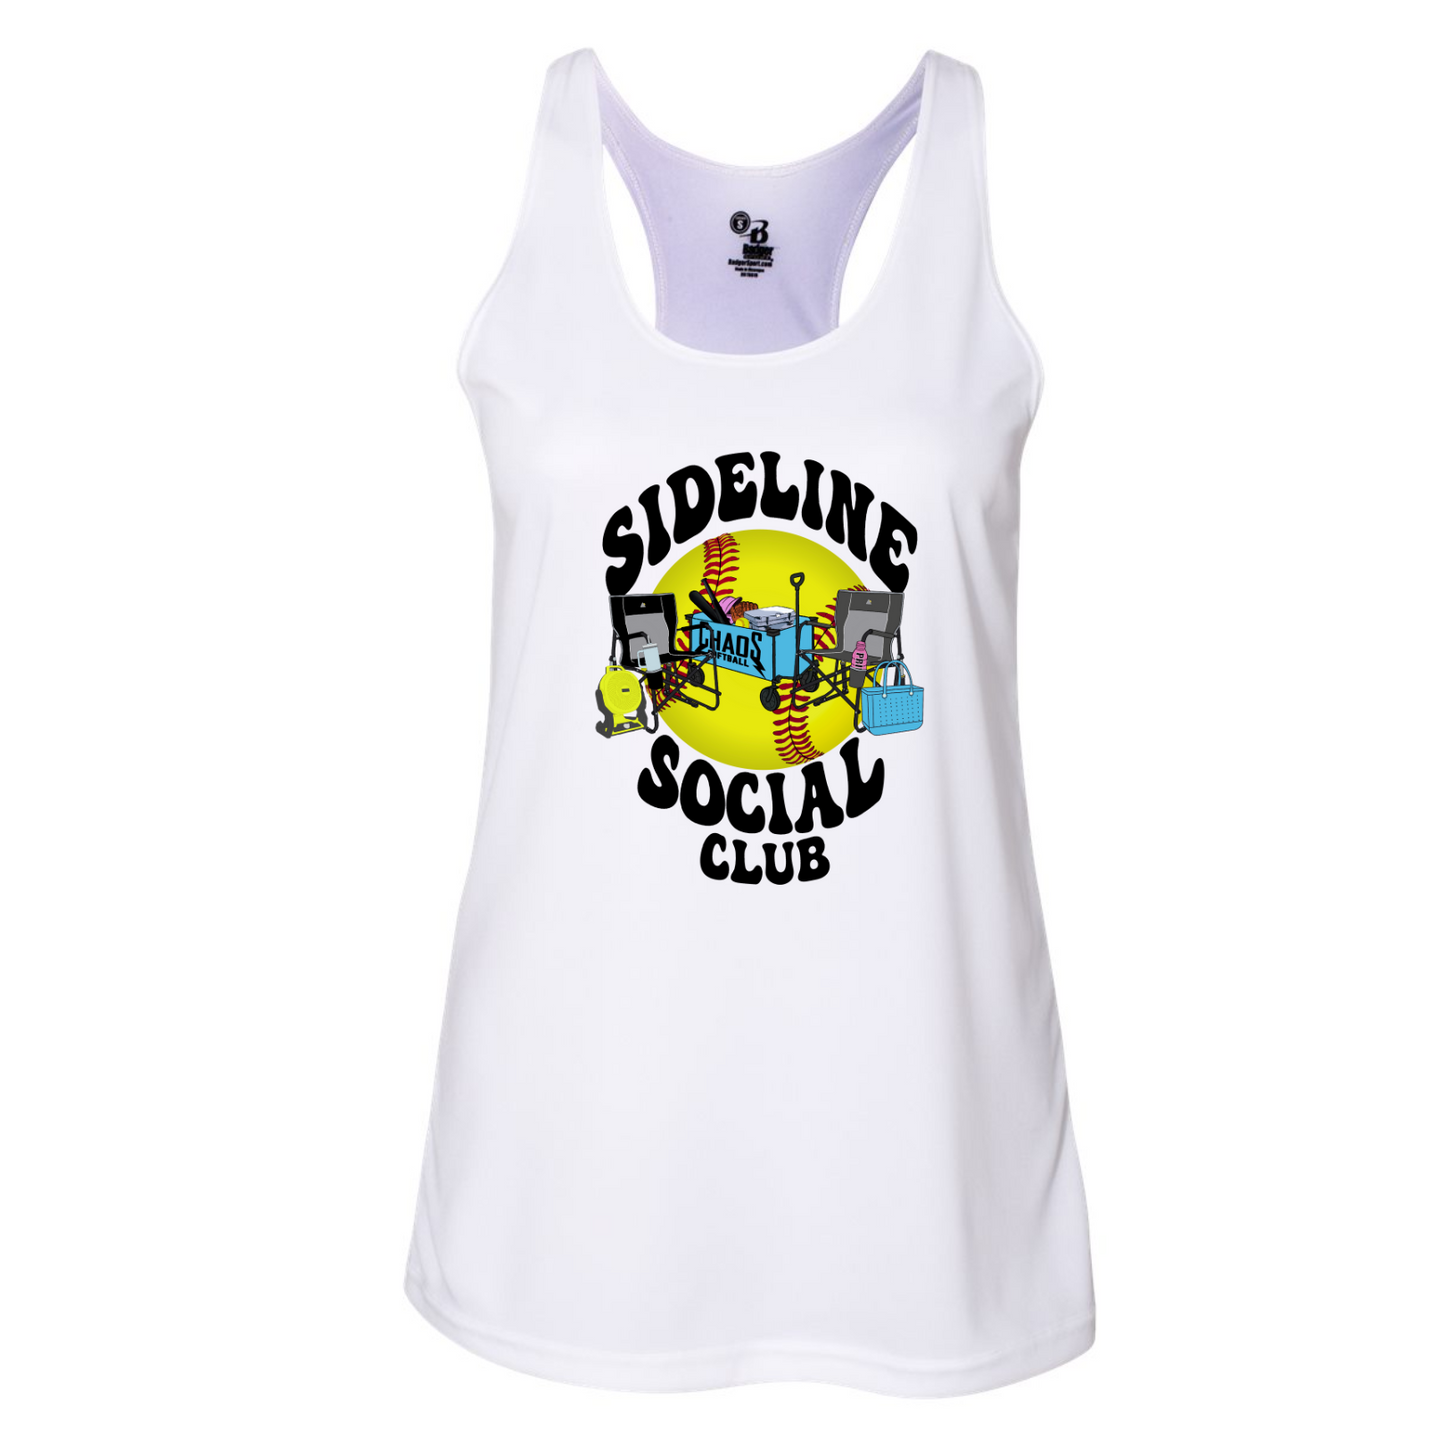 CHAOS "Sideline Social Club" Racerback Tank